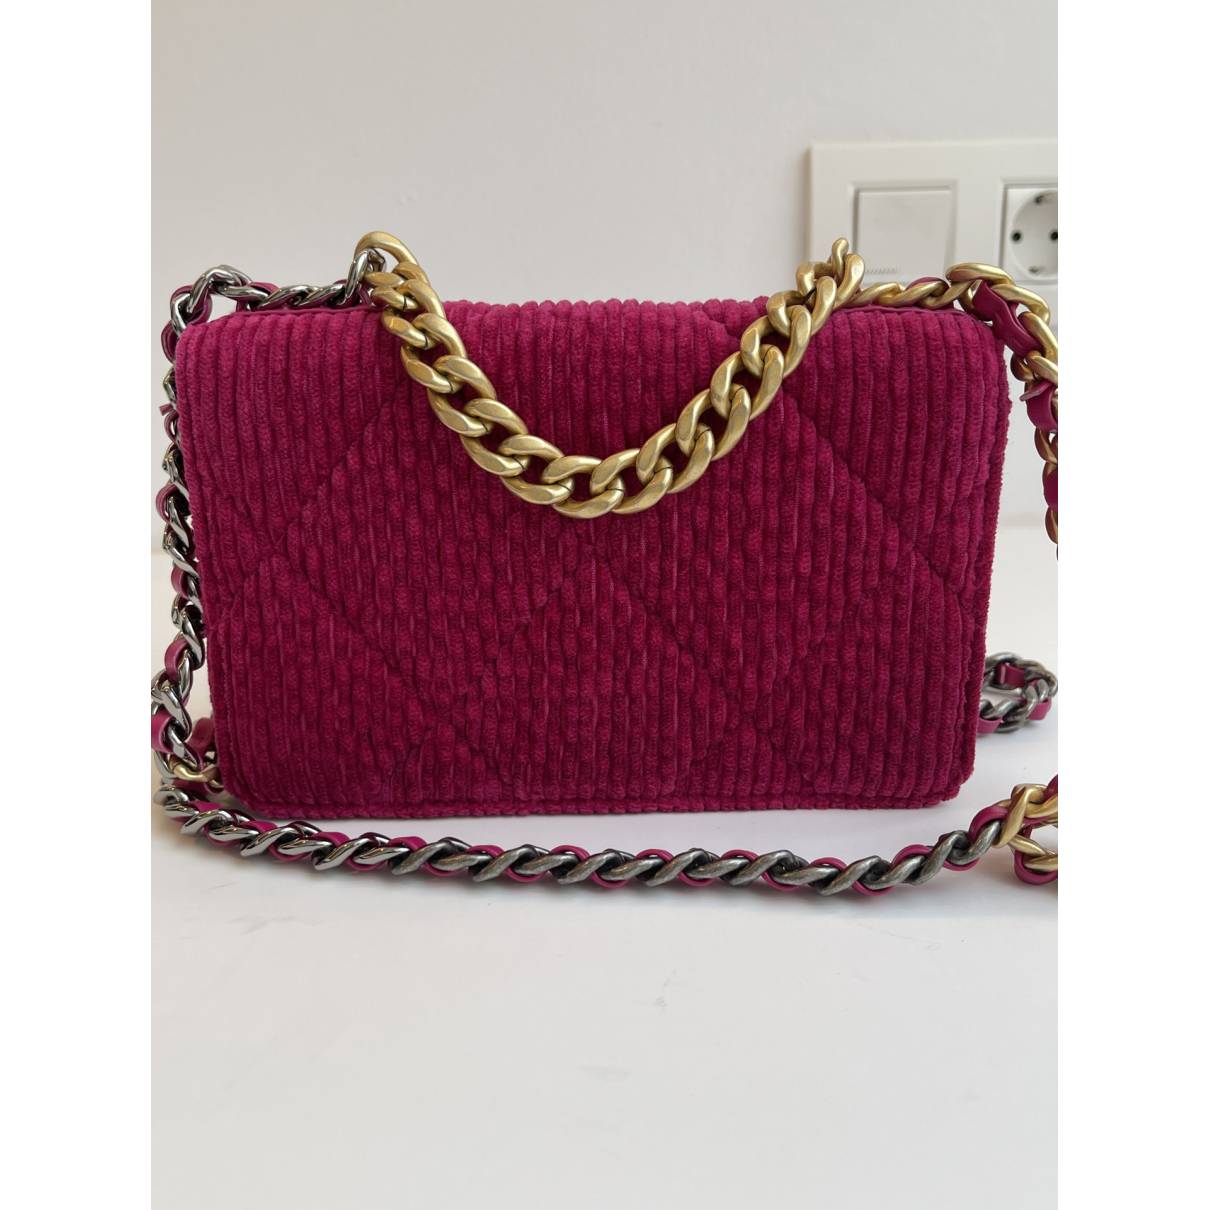 Chanel - Authenticated Wallet on Chain Chanel 19 Handbag - Velvet Pink Plain for Women, Never Worn